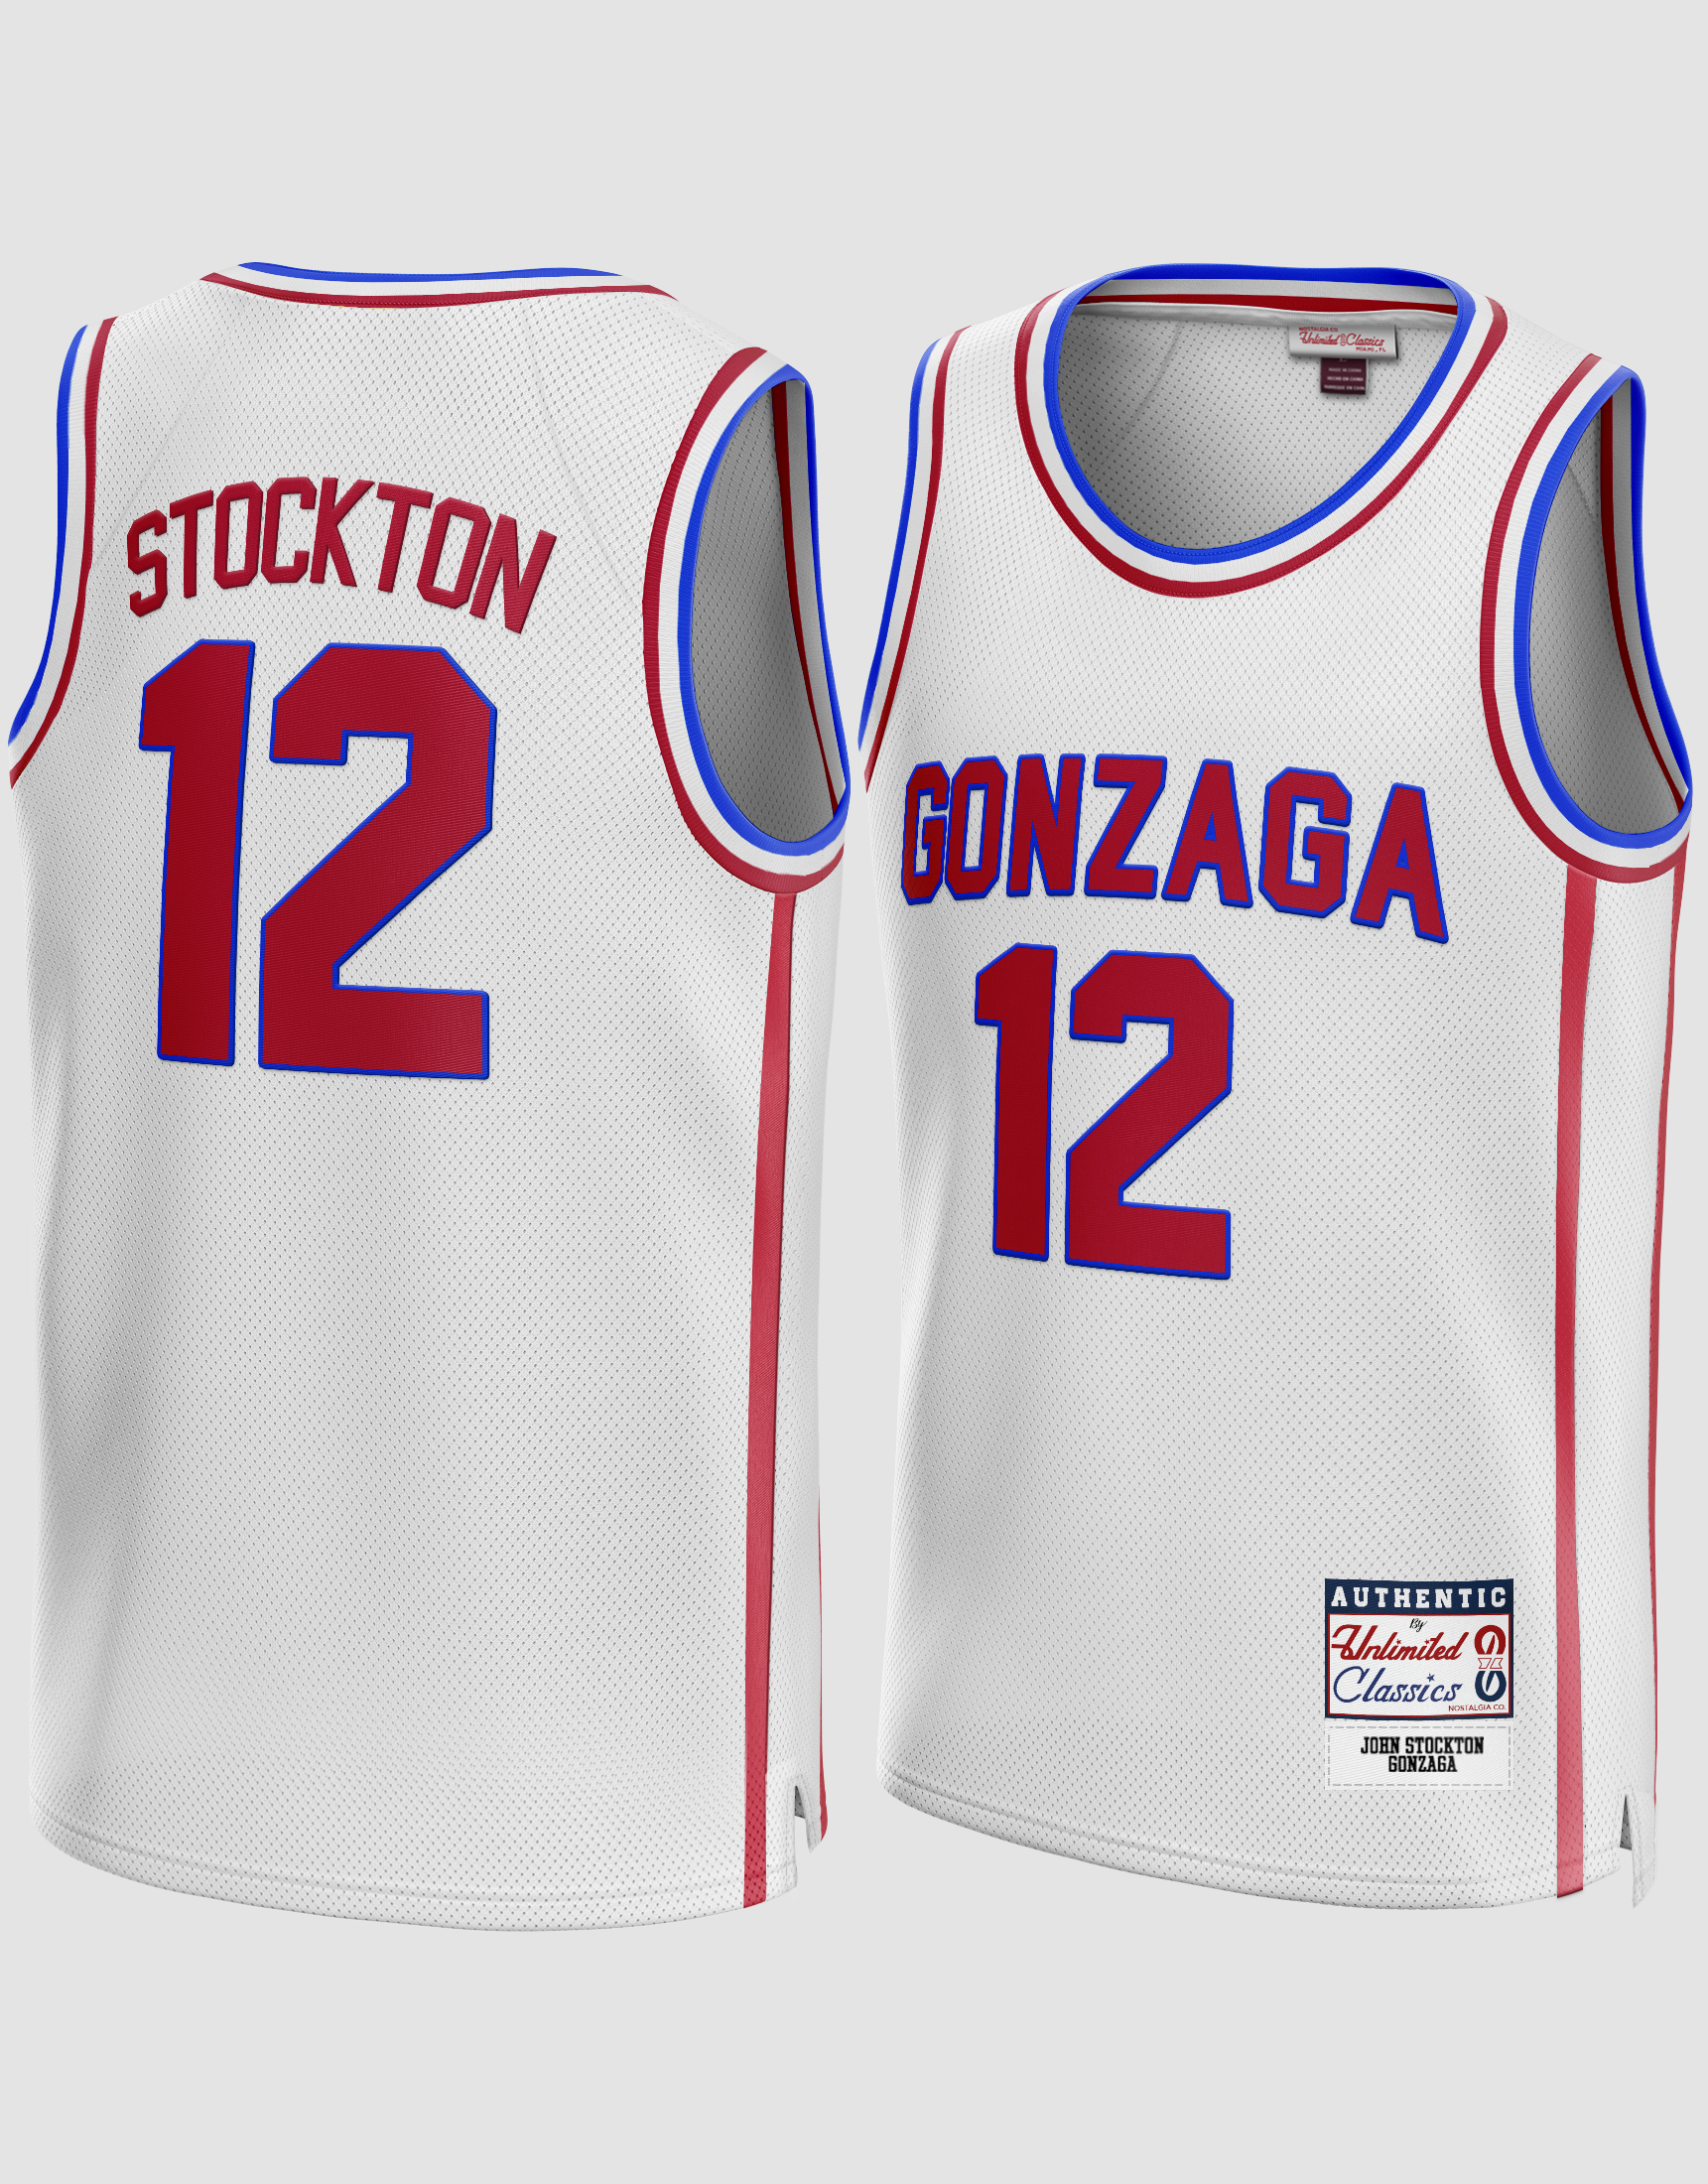 Camiseta de baloncesto John Stockton #12 Gonzaga 